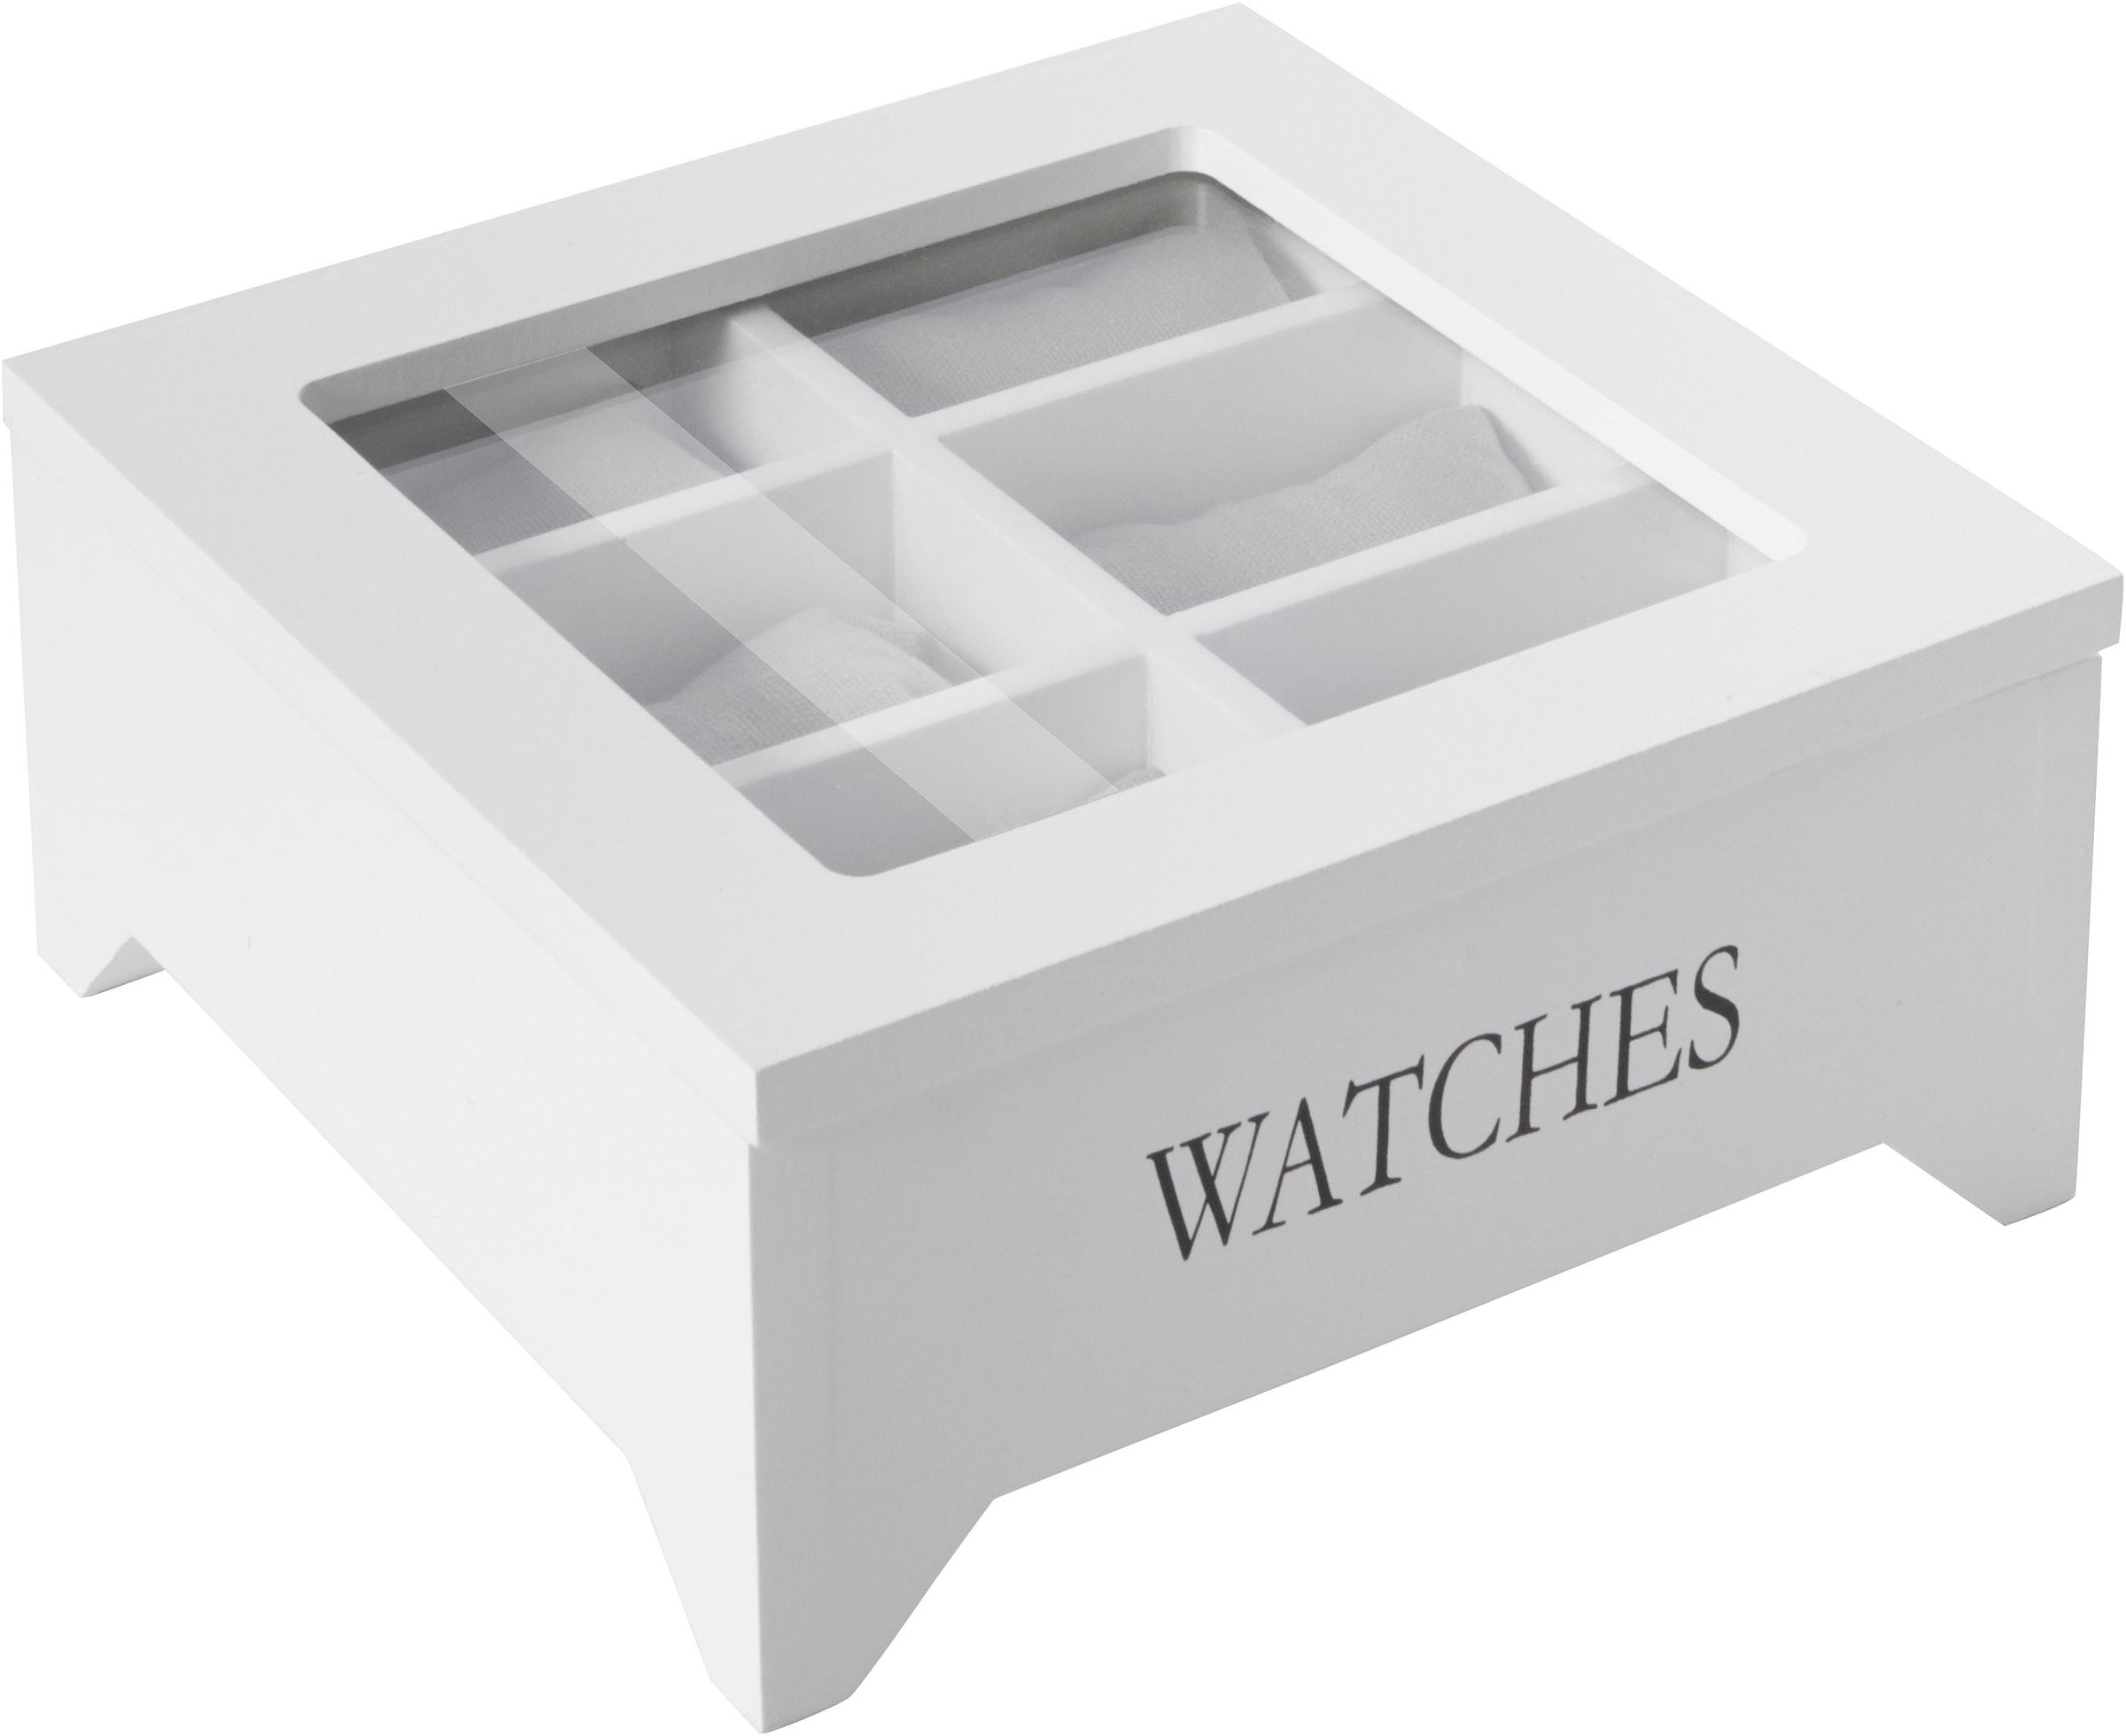 Home affaire Uhrenbox "WATCHES"